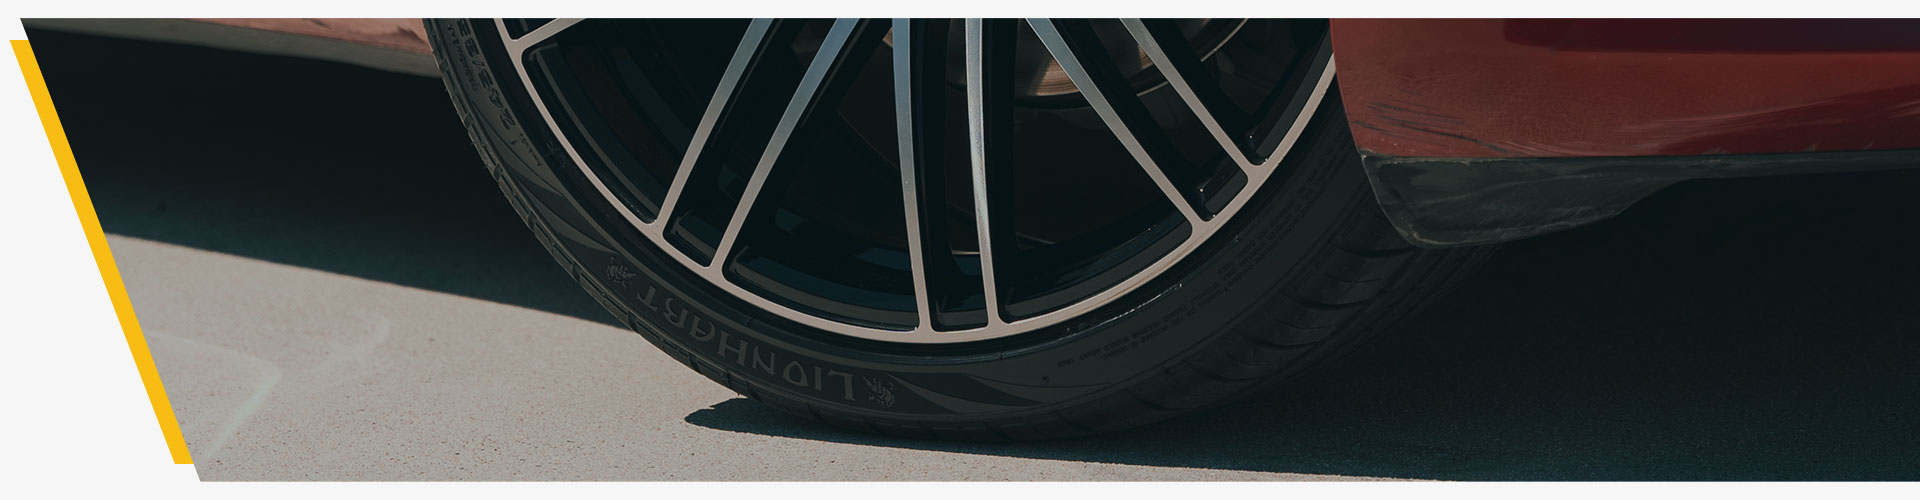 Summer Tires Image 4